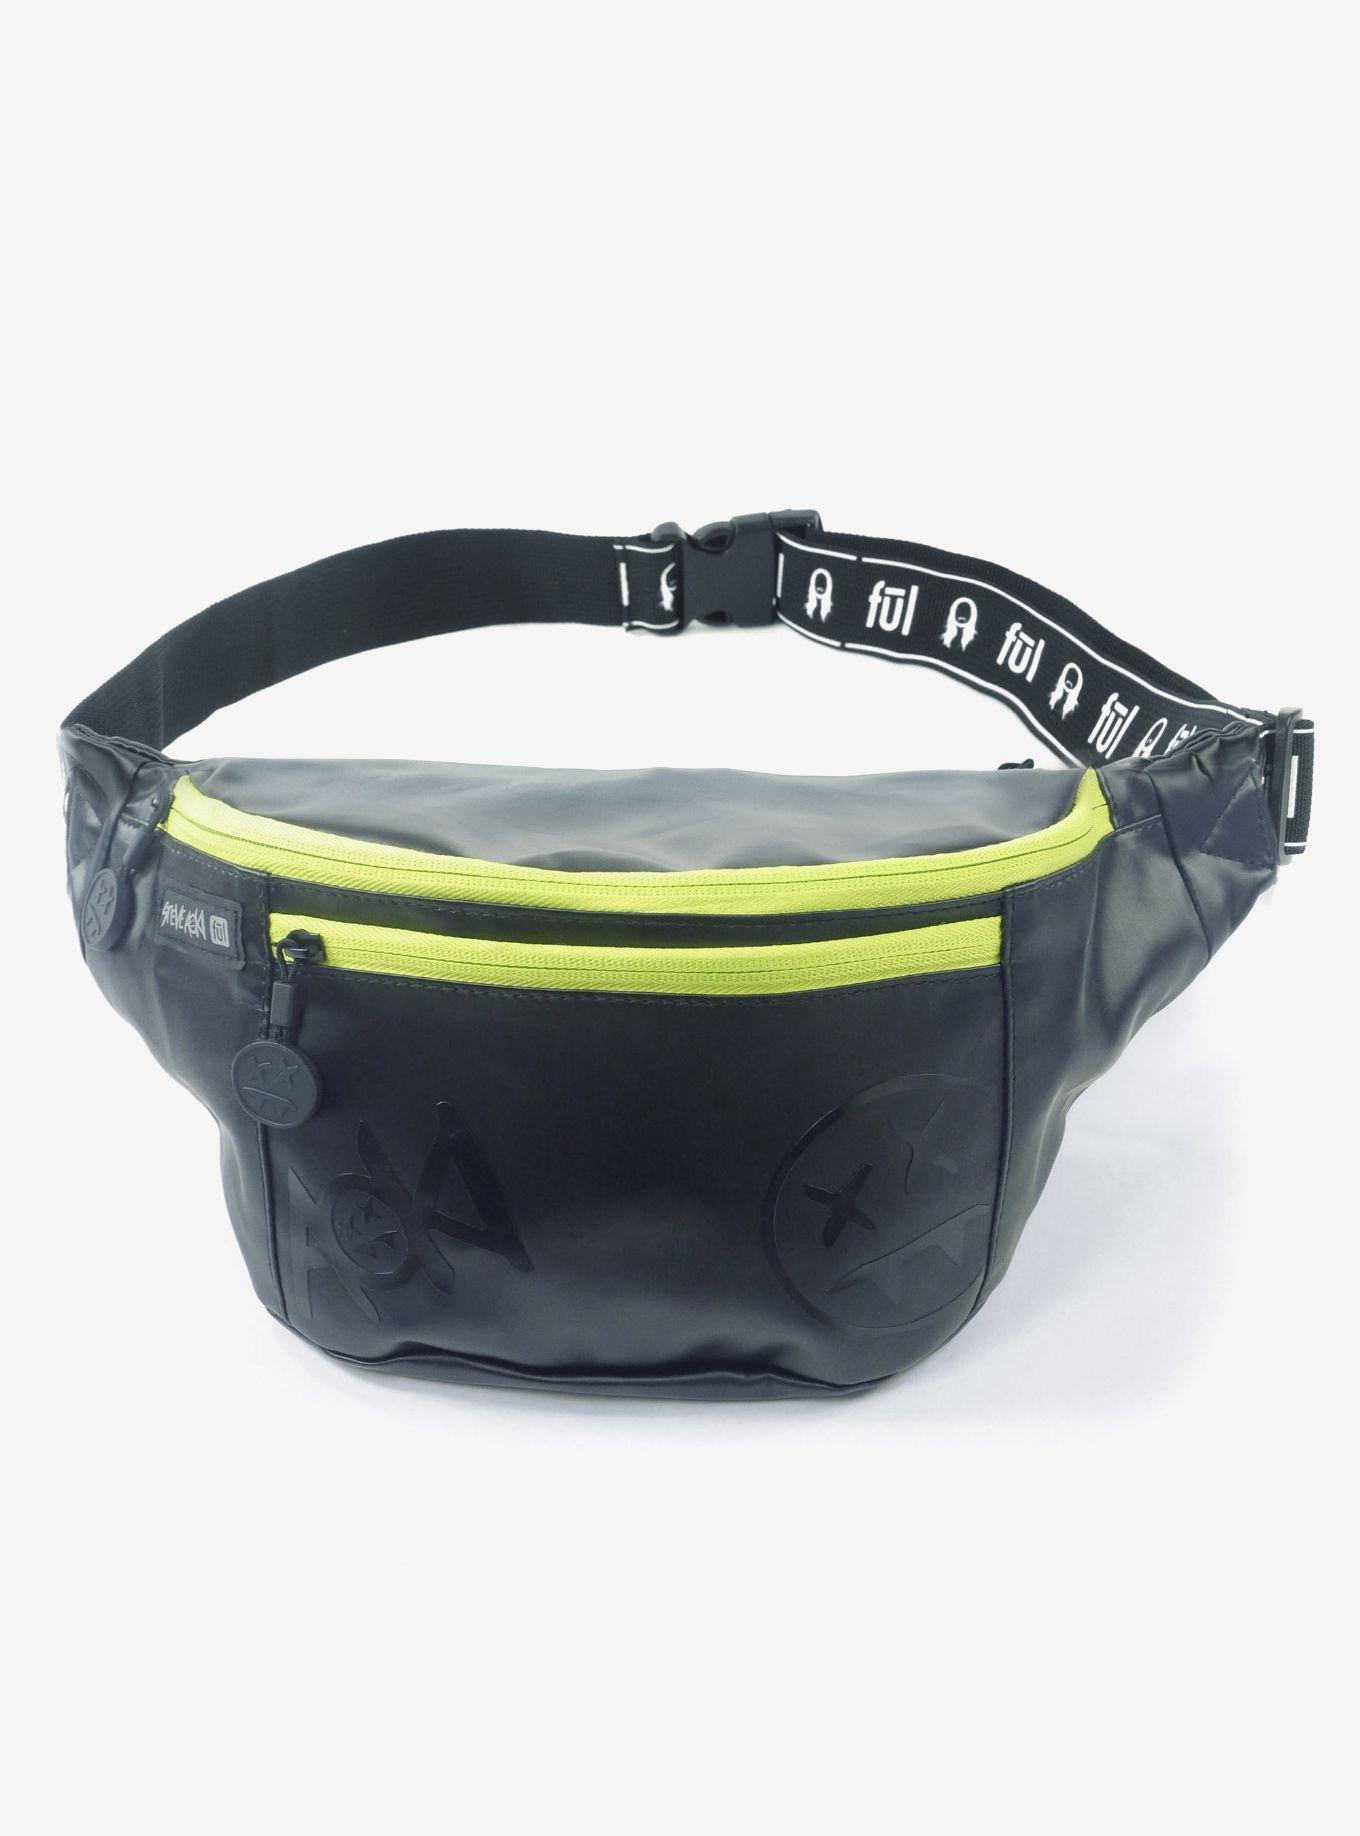 Steve Aoki FUL FANG Black and Neon Green Crossbody Bag, , hi-res